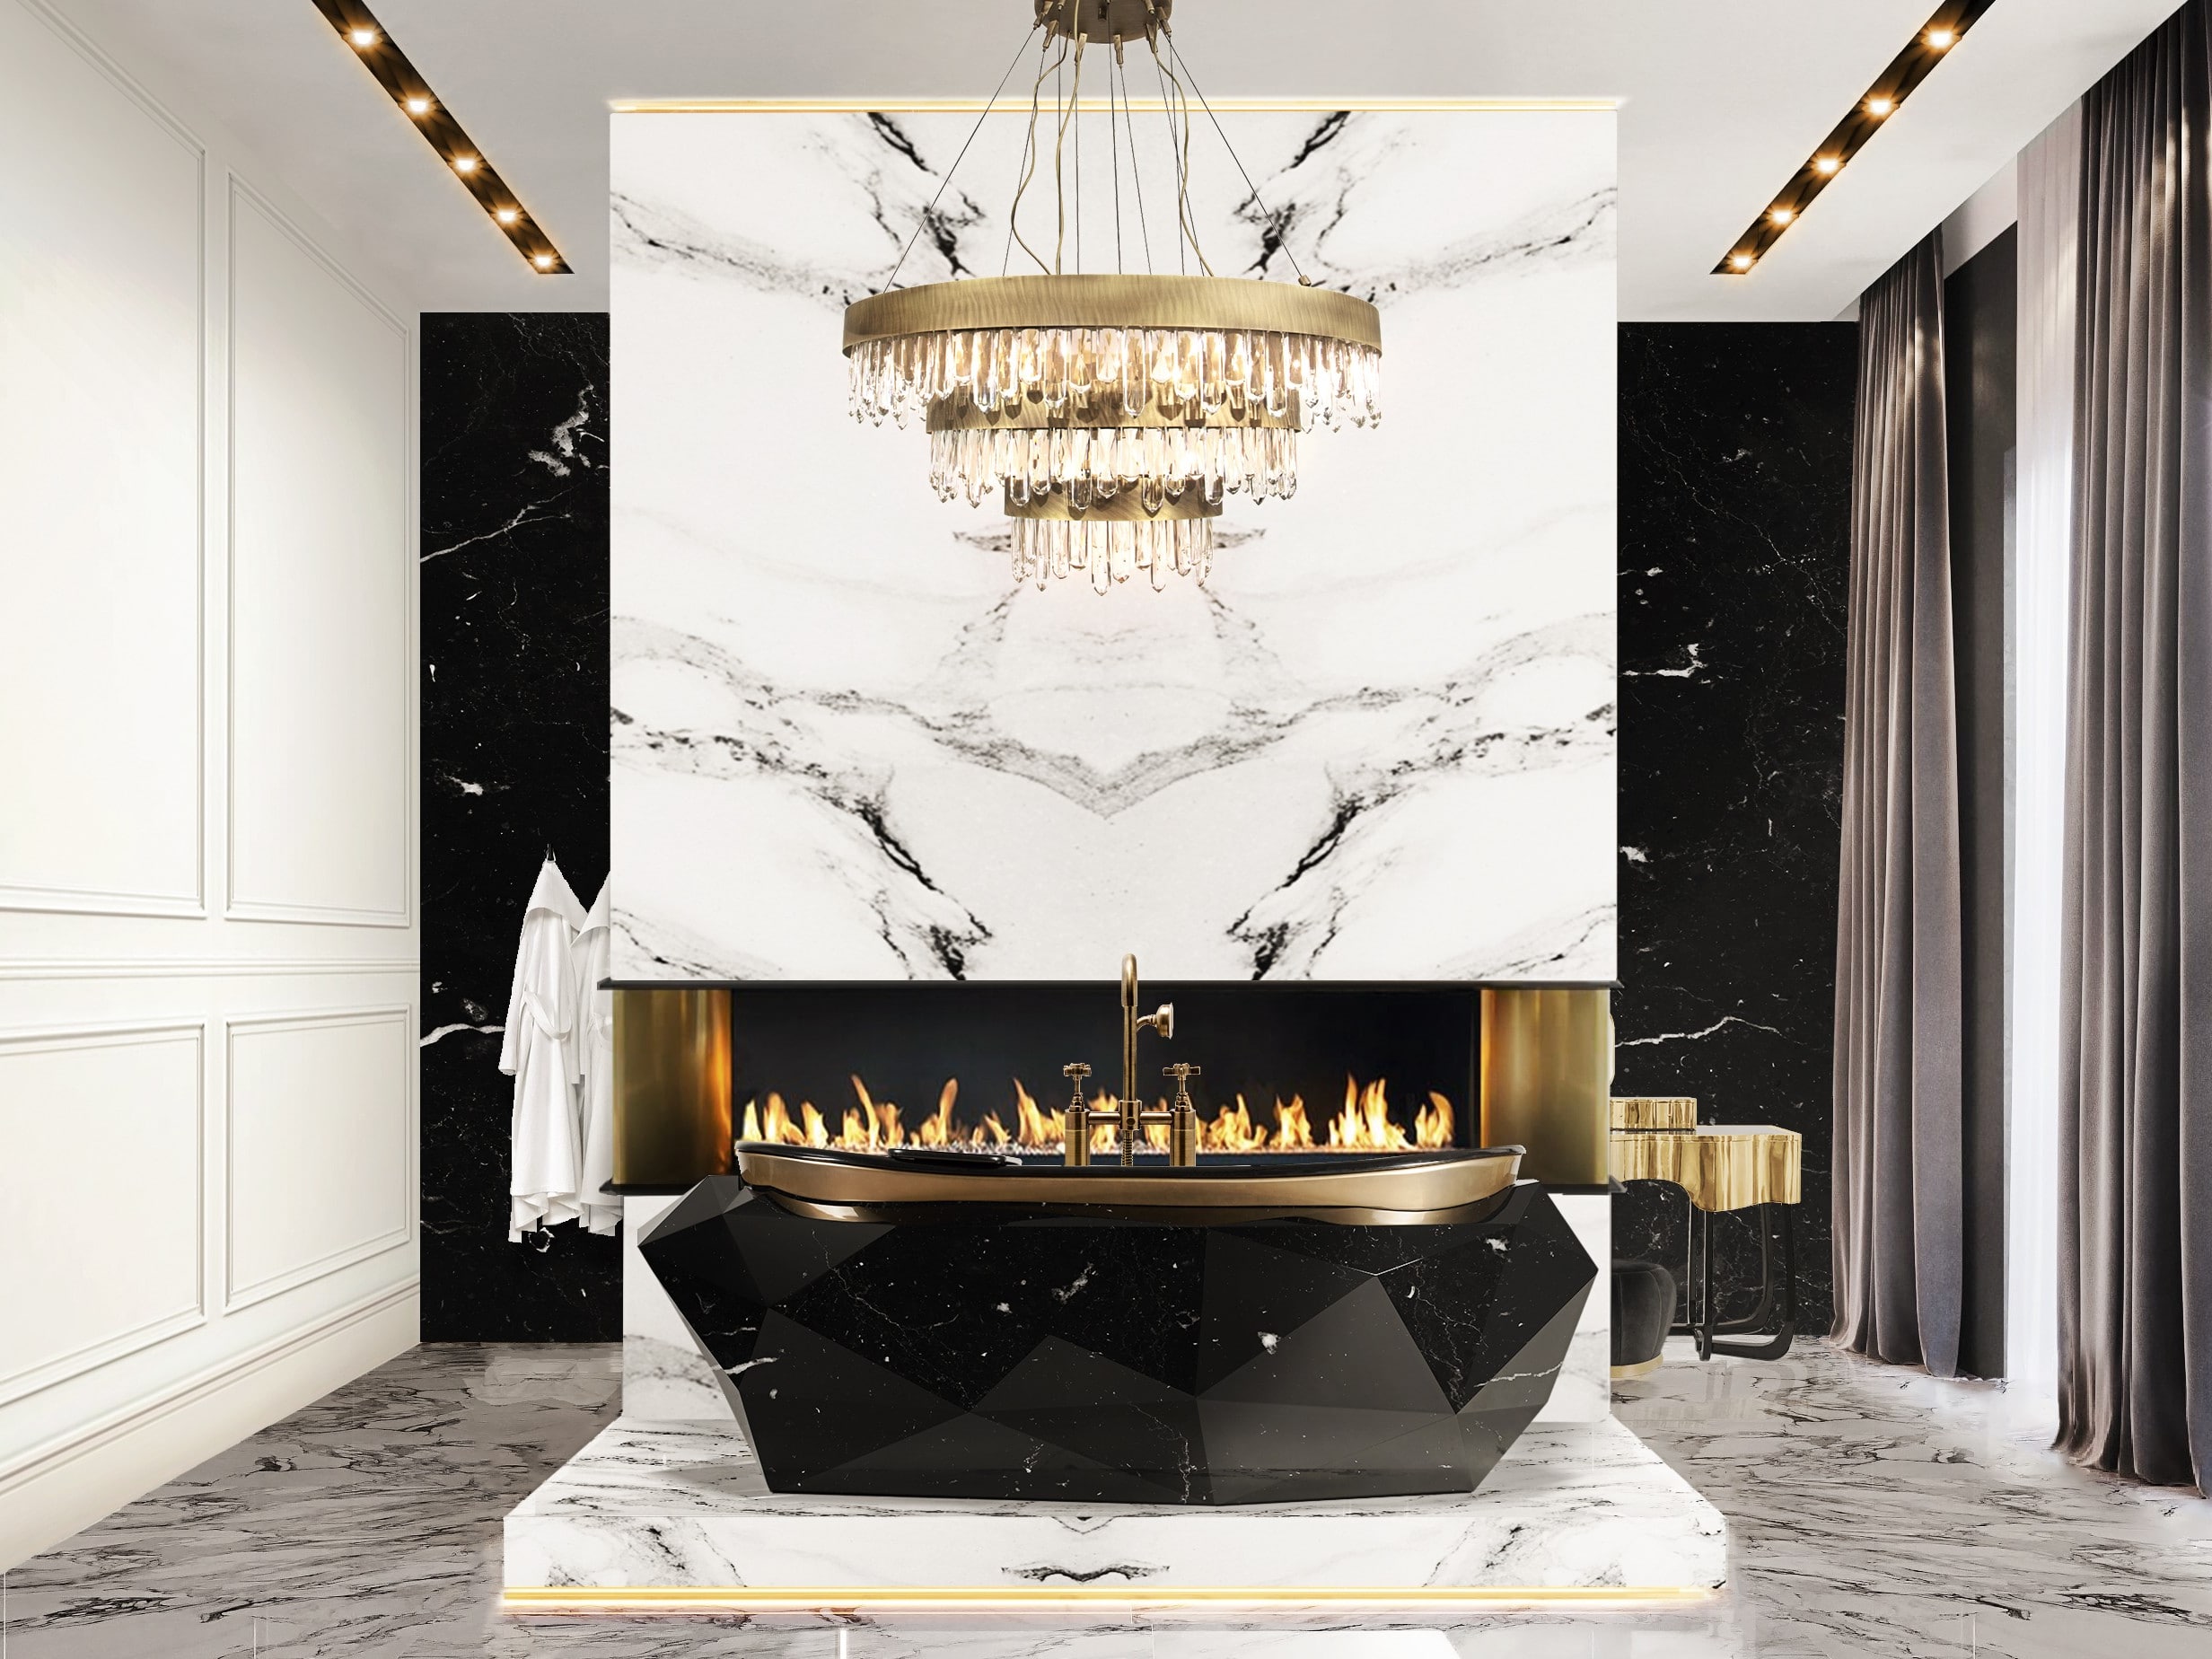 Black and White Marble Bathroom With Diamond Bathtub - Home'Society